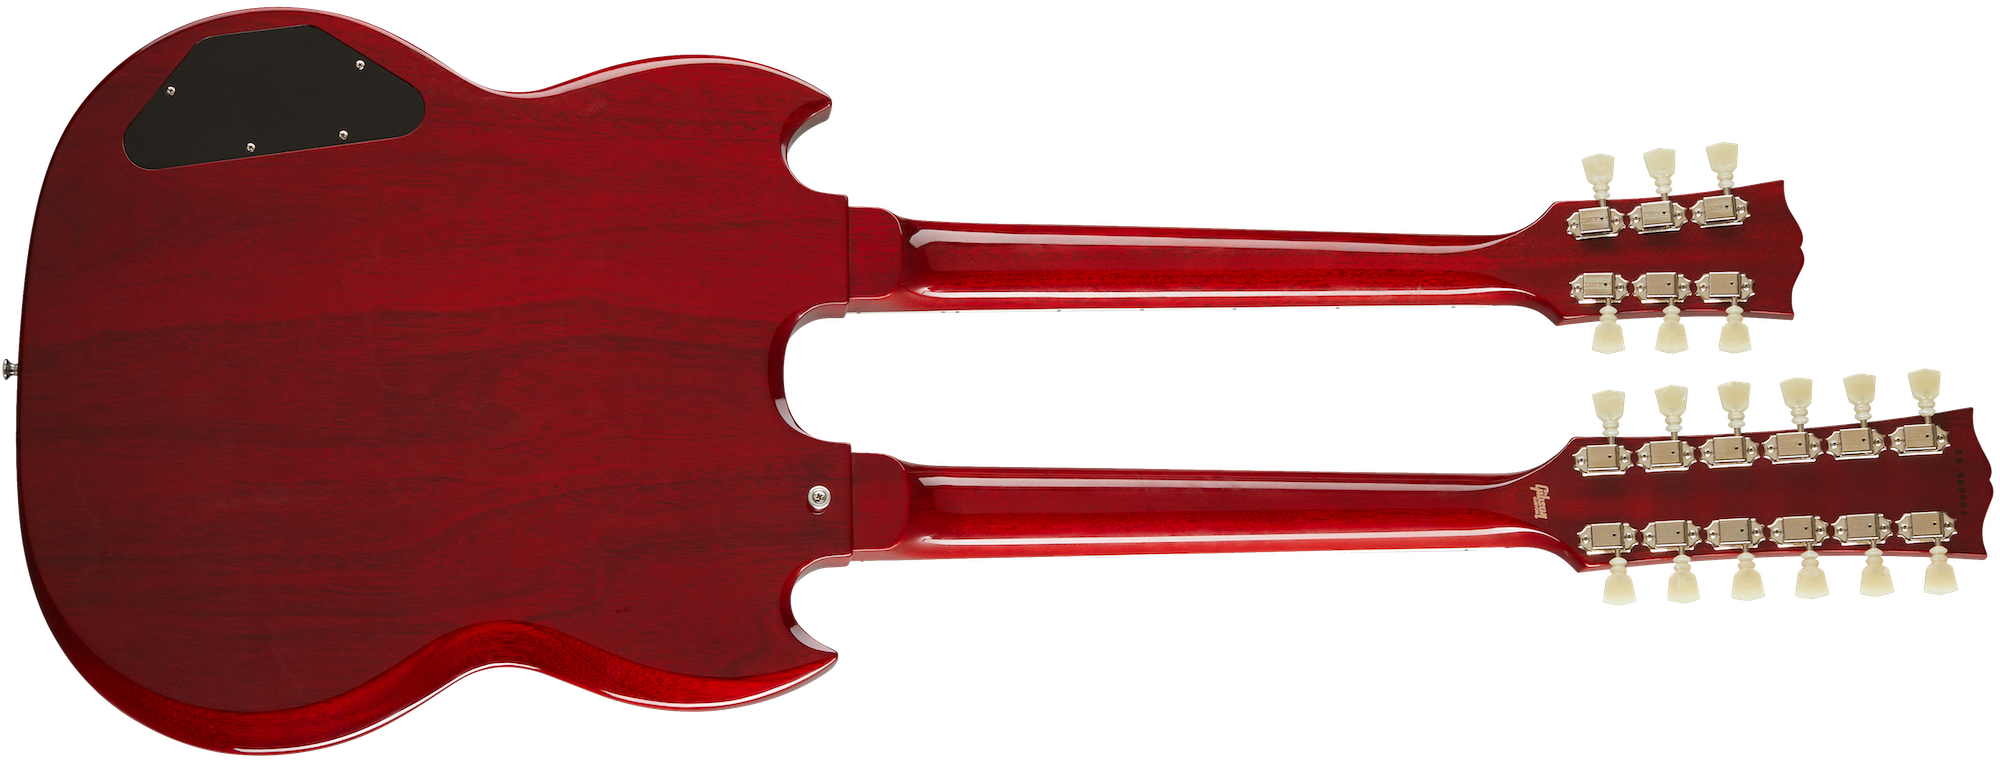 EDS-1275 Double Neck Cherry Red